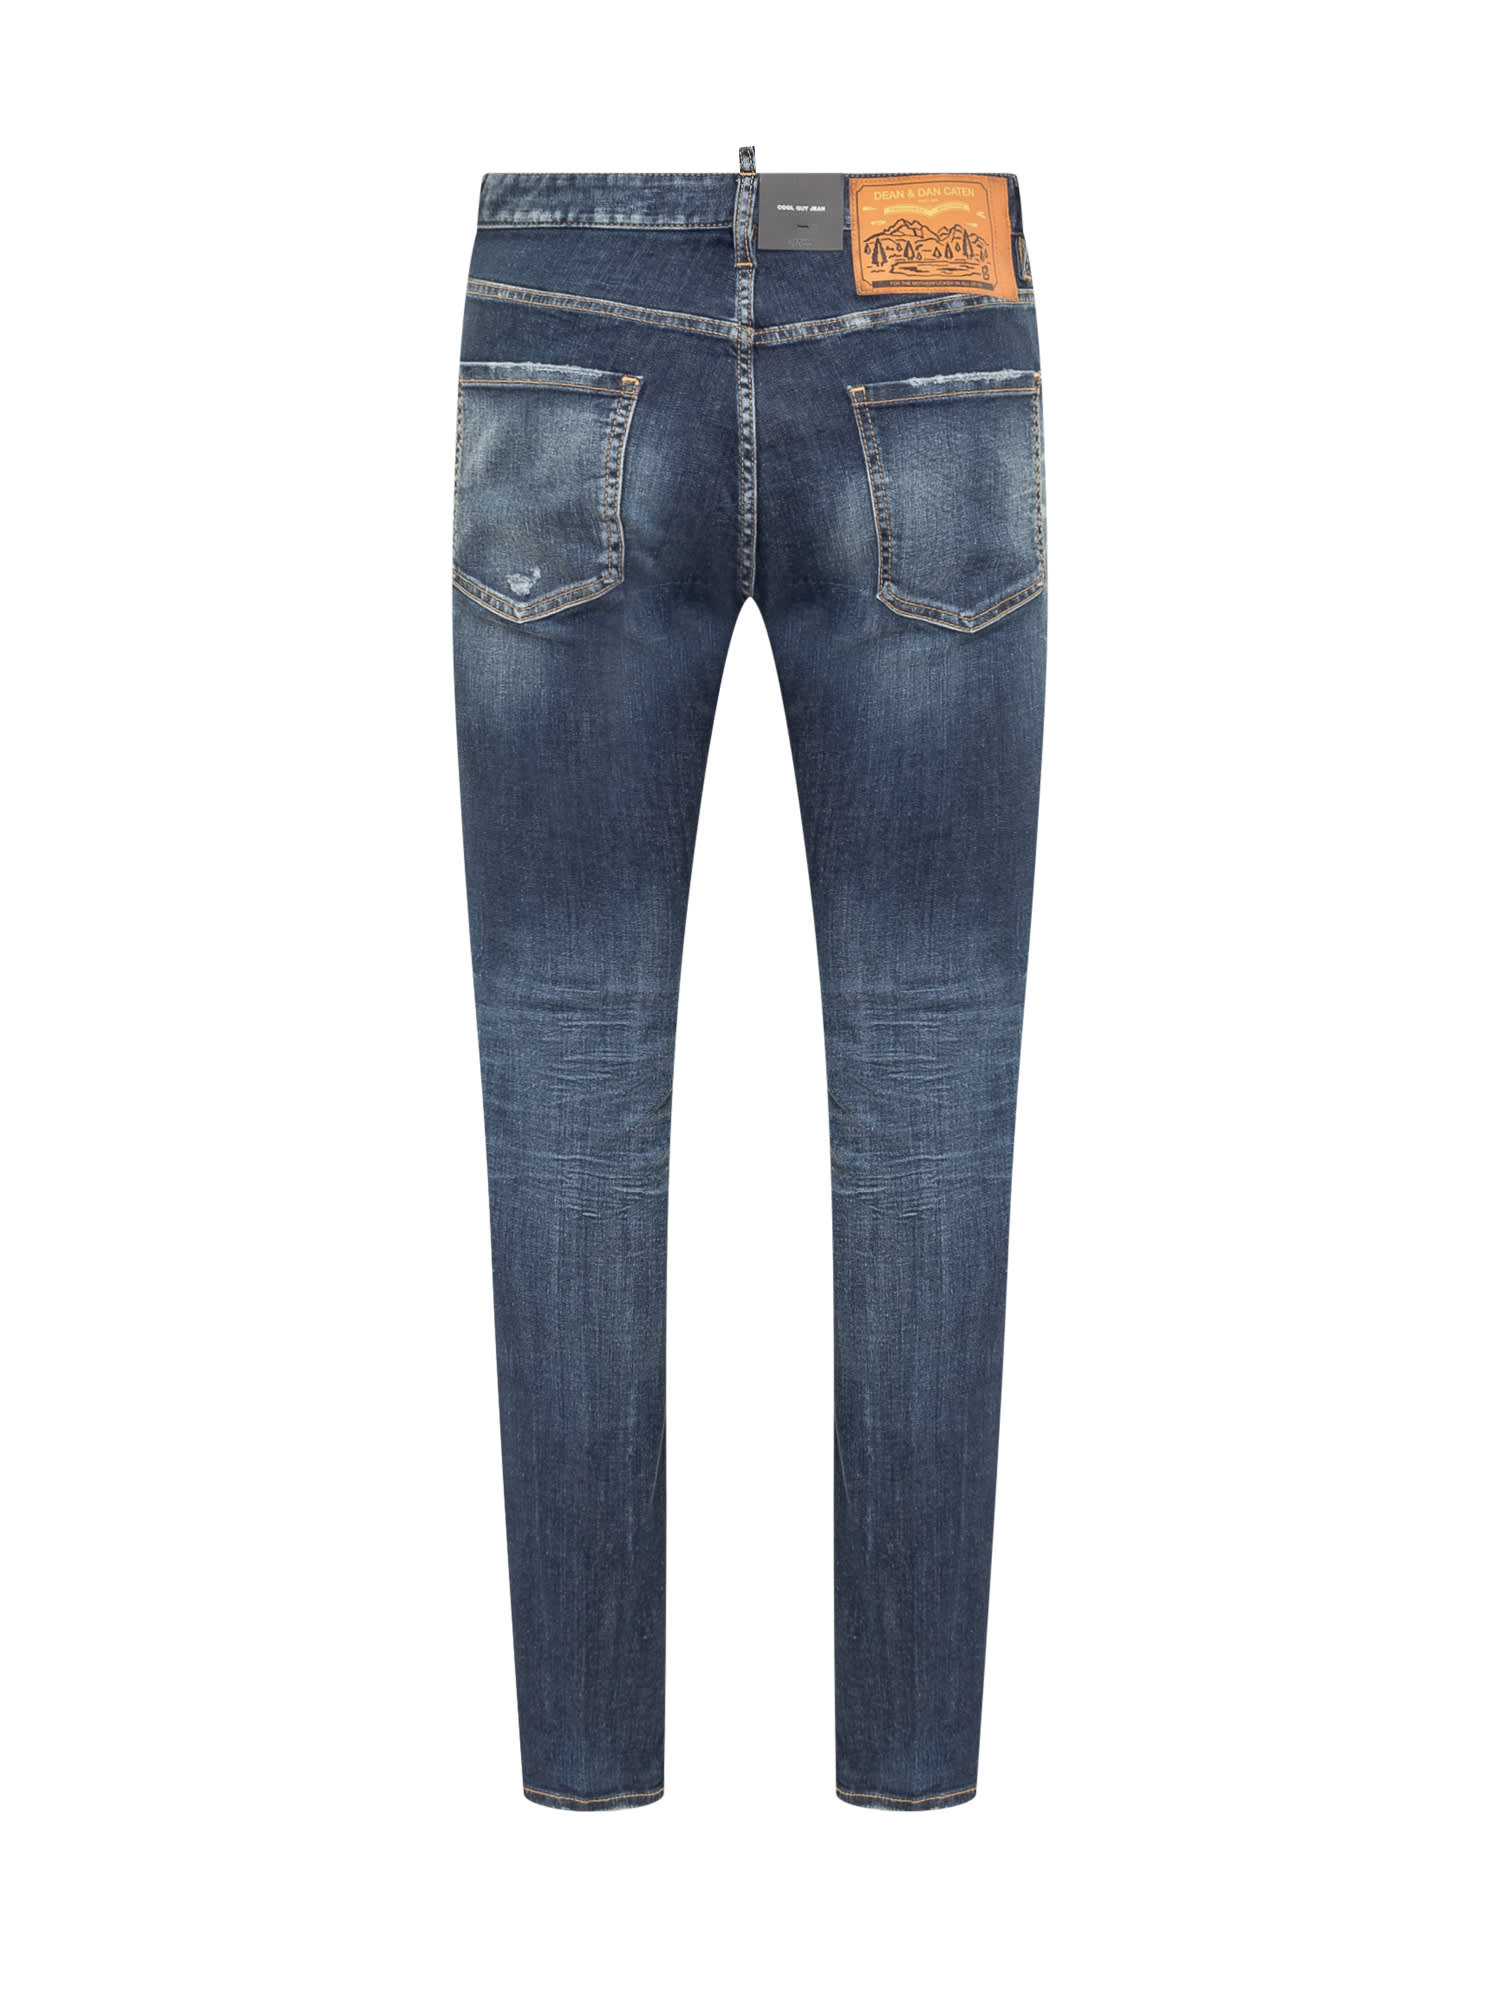 DSquared 2 Skinny Jean, $495, farfetch.com